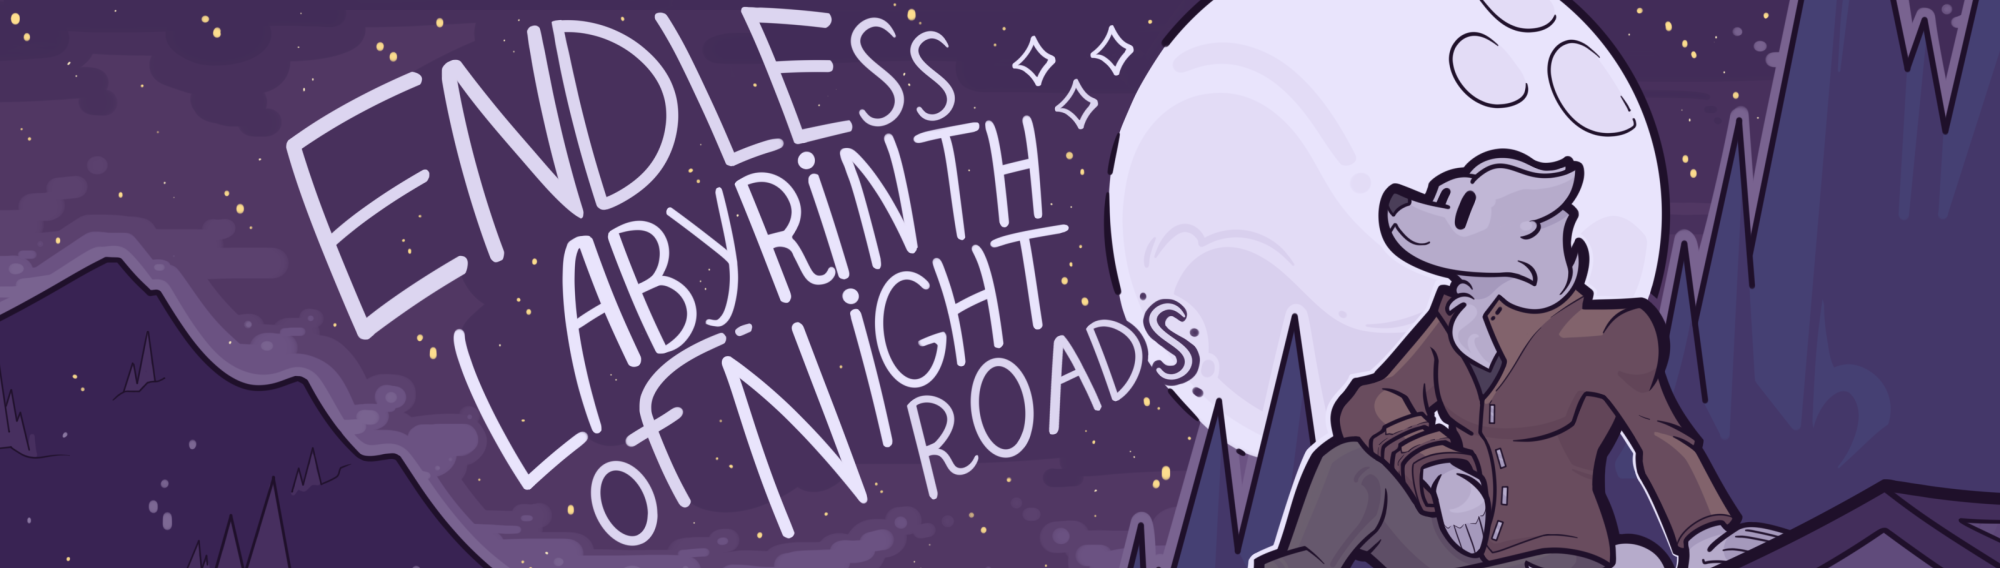 Endless Labyrinth of Night Roads